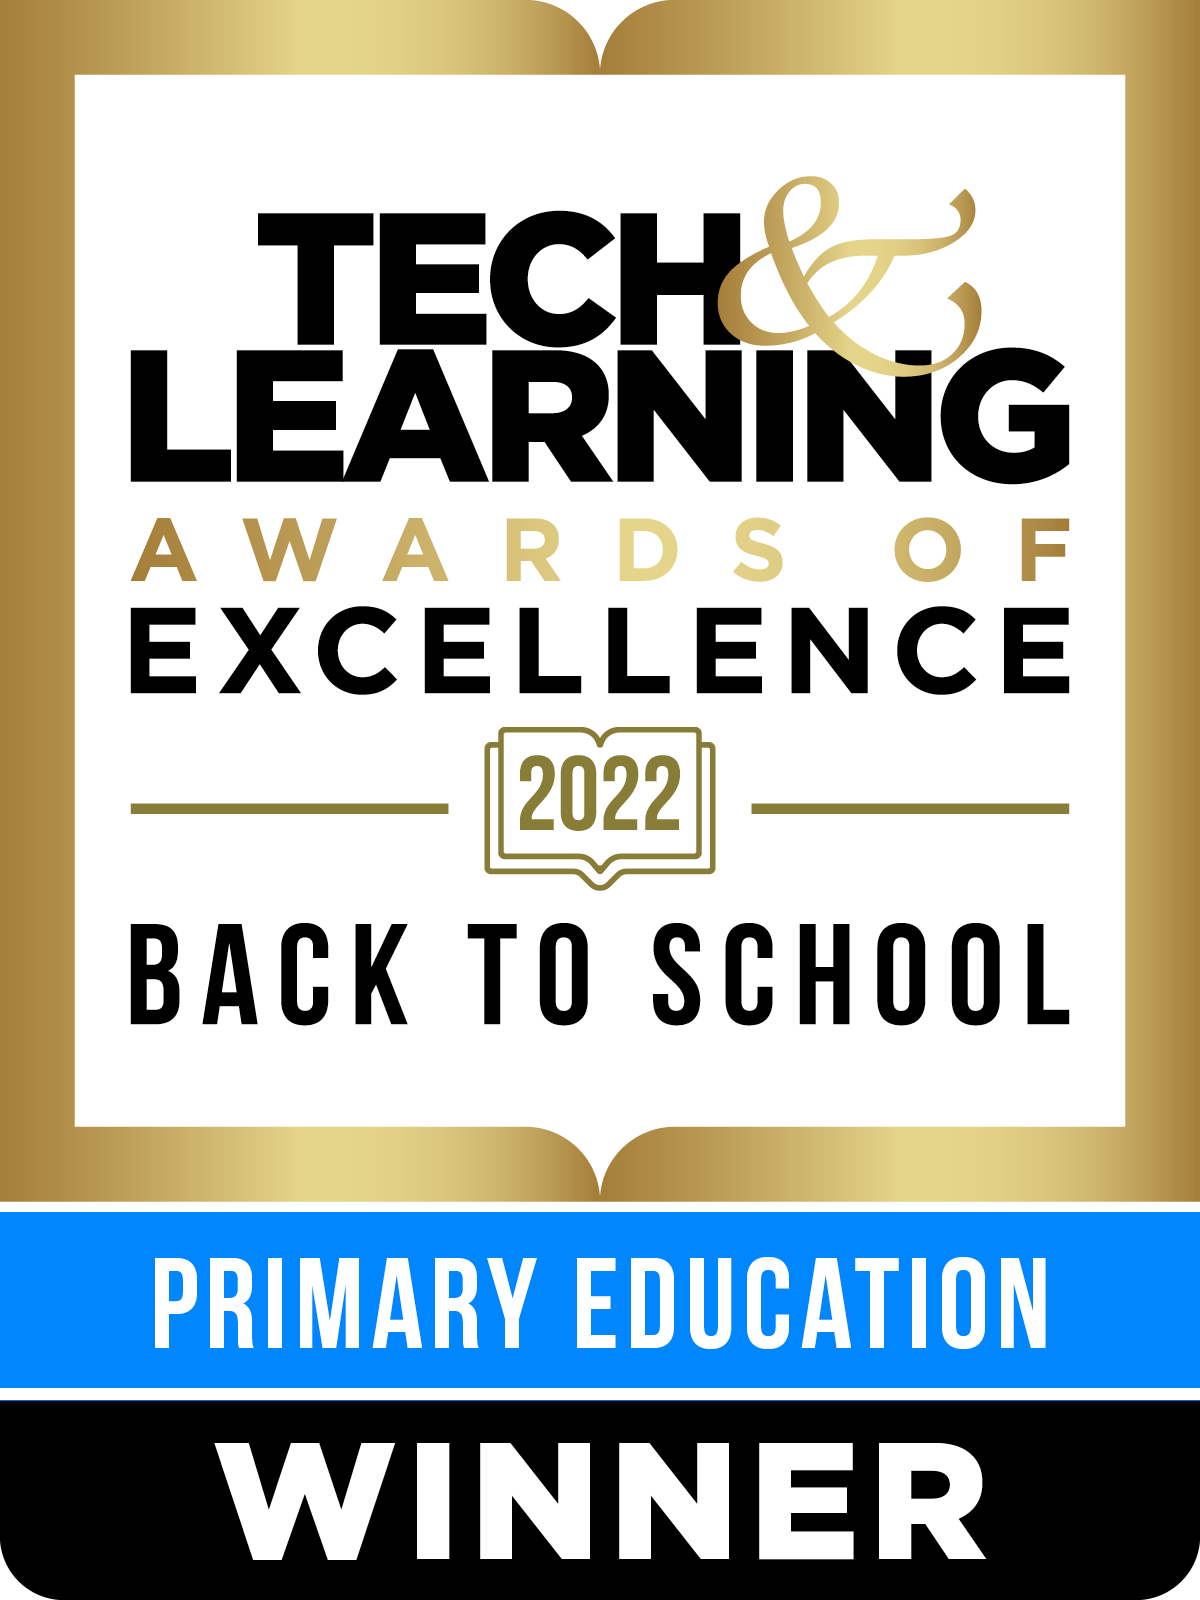 Tech Learning & Awards of Excellence 2022 winner badge